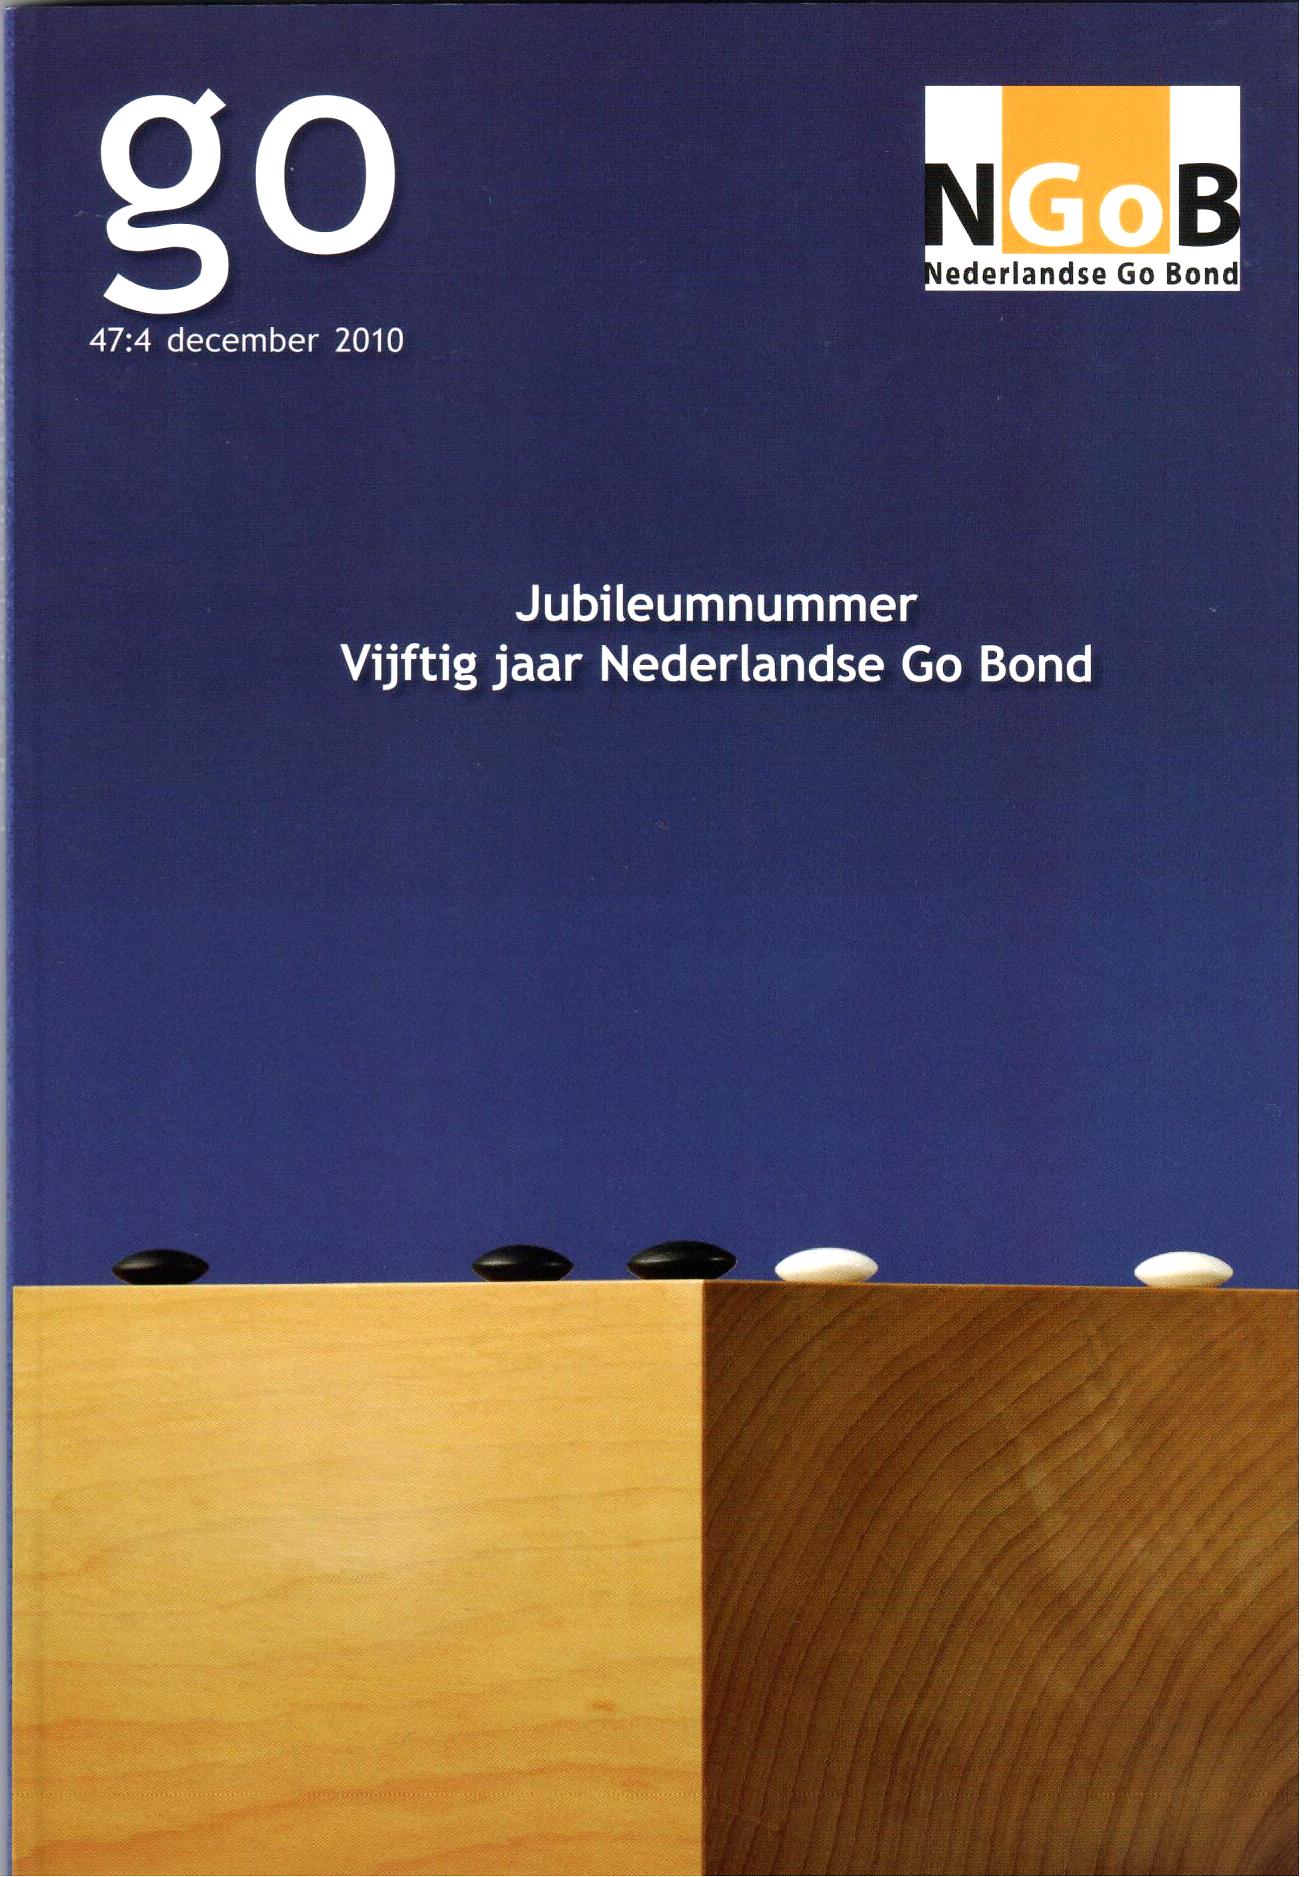 Vijftig jaar Nederlandse Go Bond, jubileumnummer NGoB tijdschrif